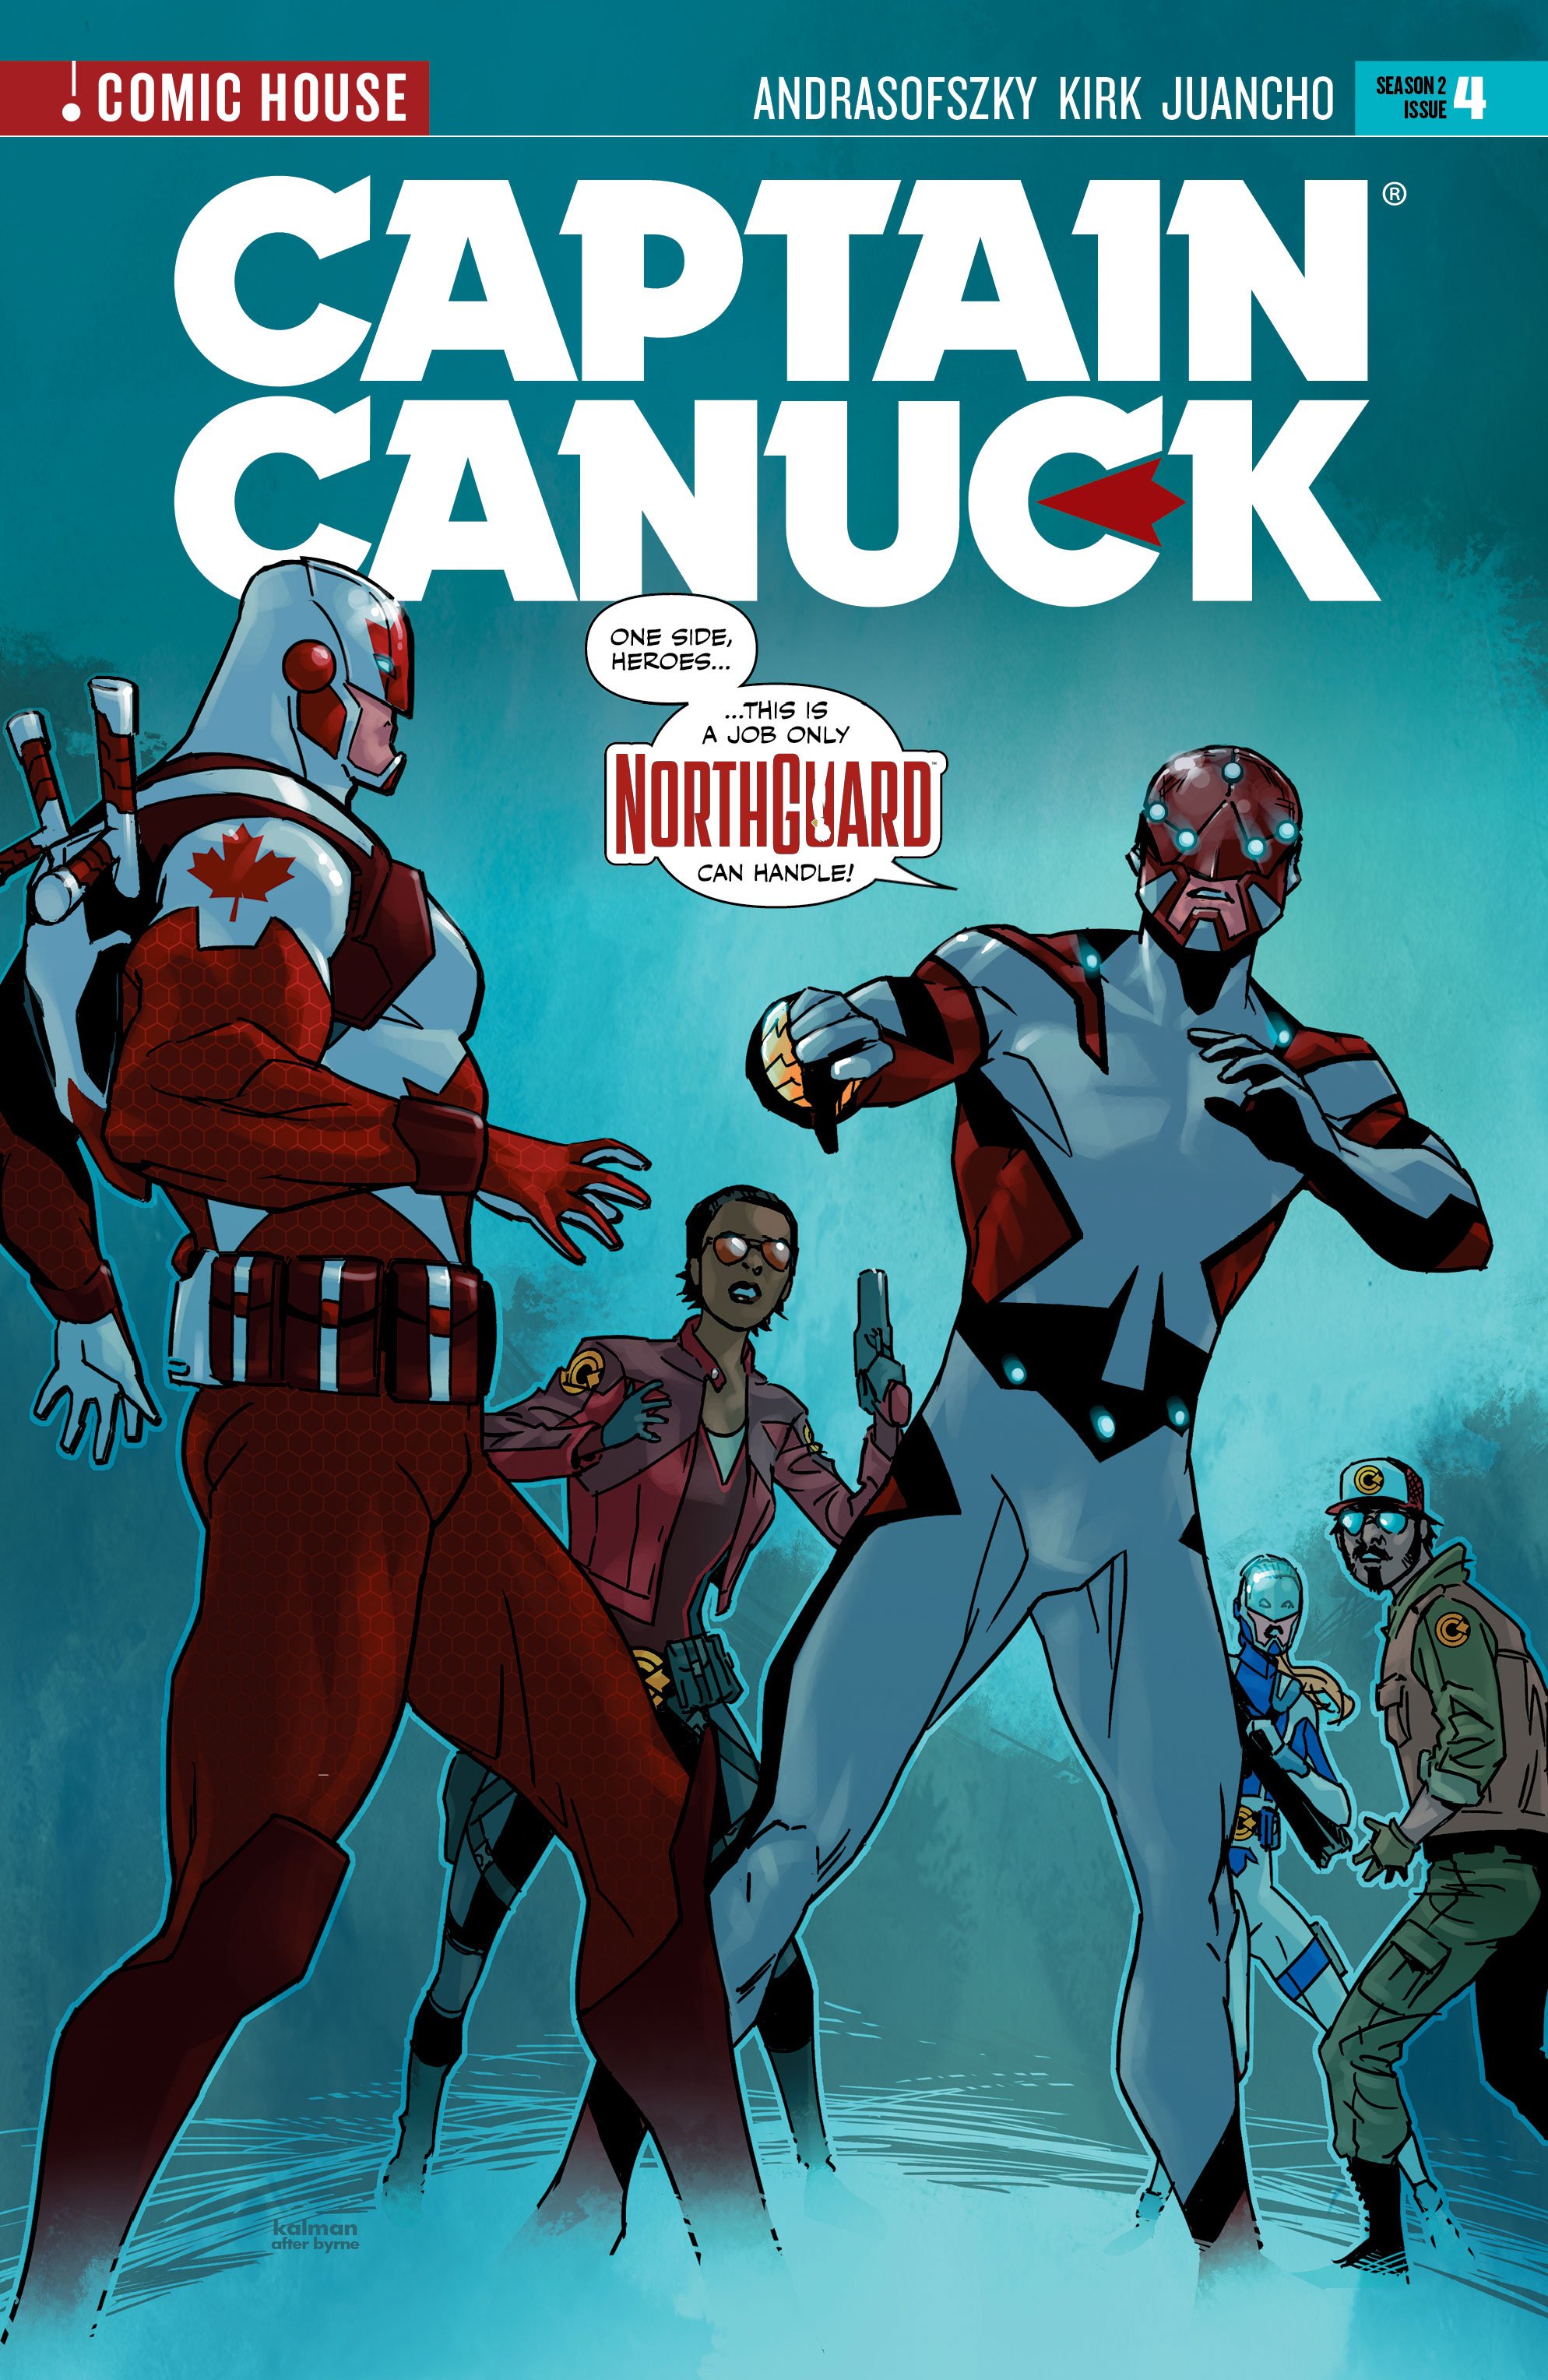 CaptainCanuck_010_S2_Issue4_cover-A.jpg